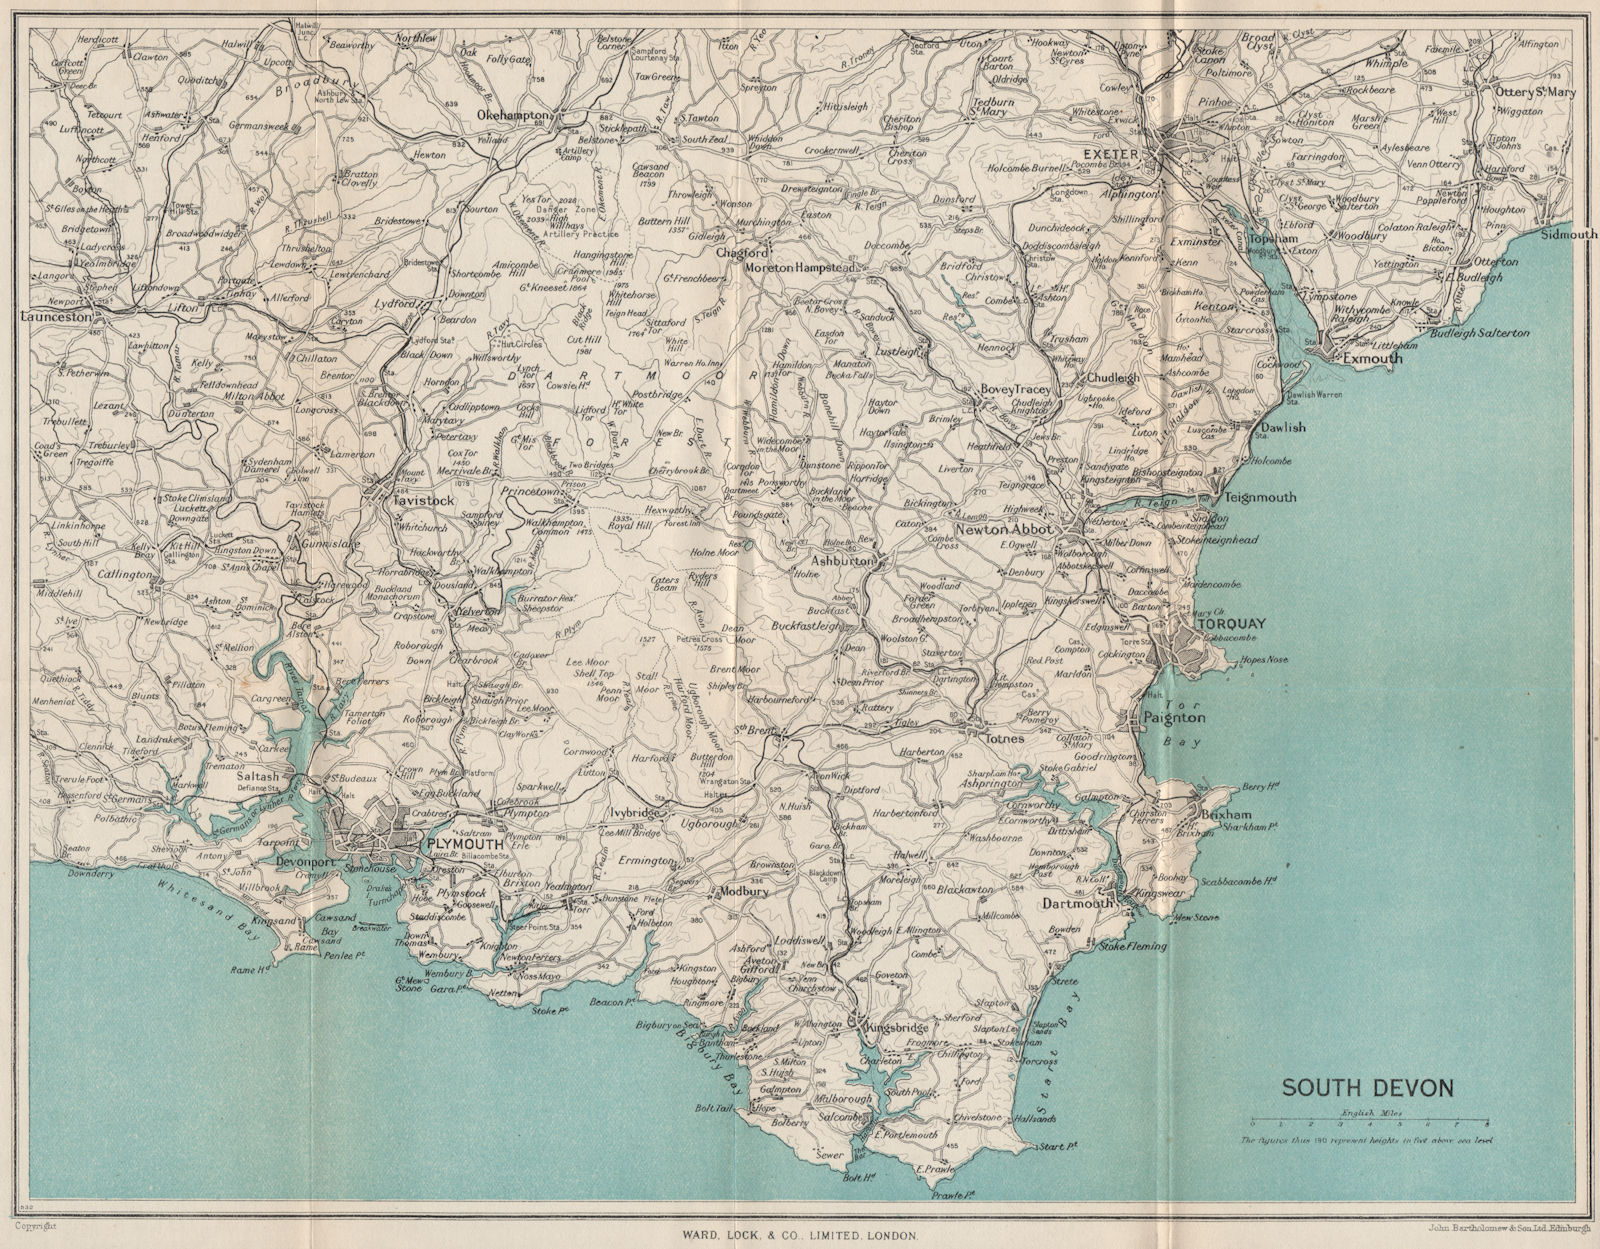 SOUTH DEVON. Dartmoor South Hams Torquay Tamar Valley Plymouth Exeter 1948 map